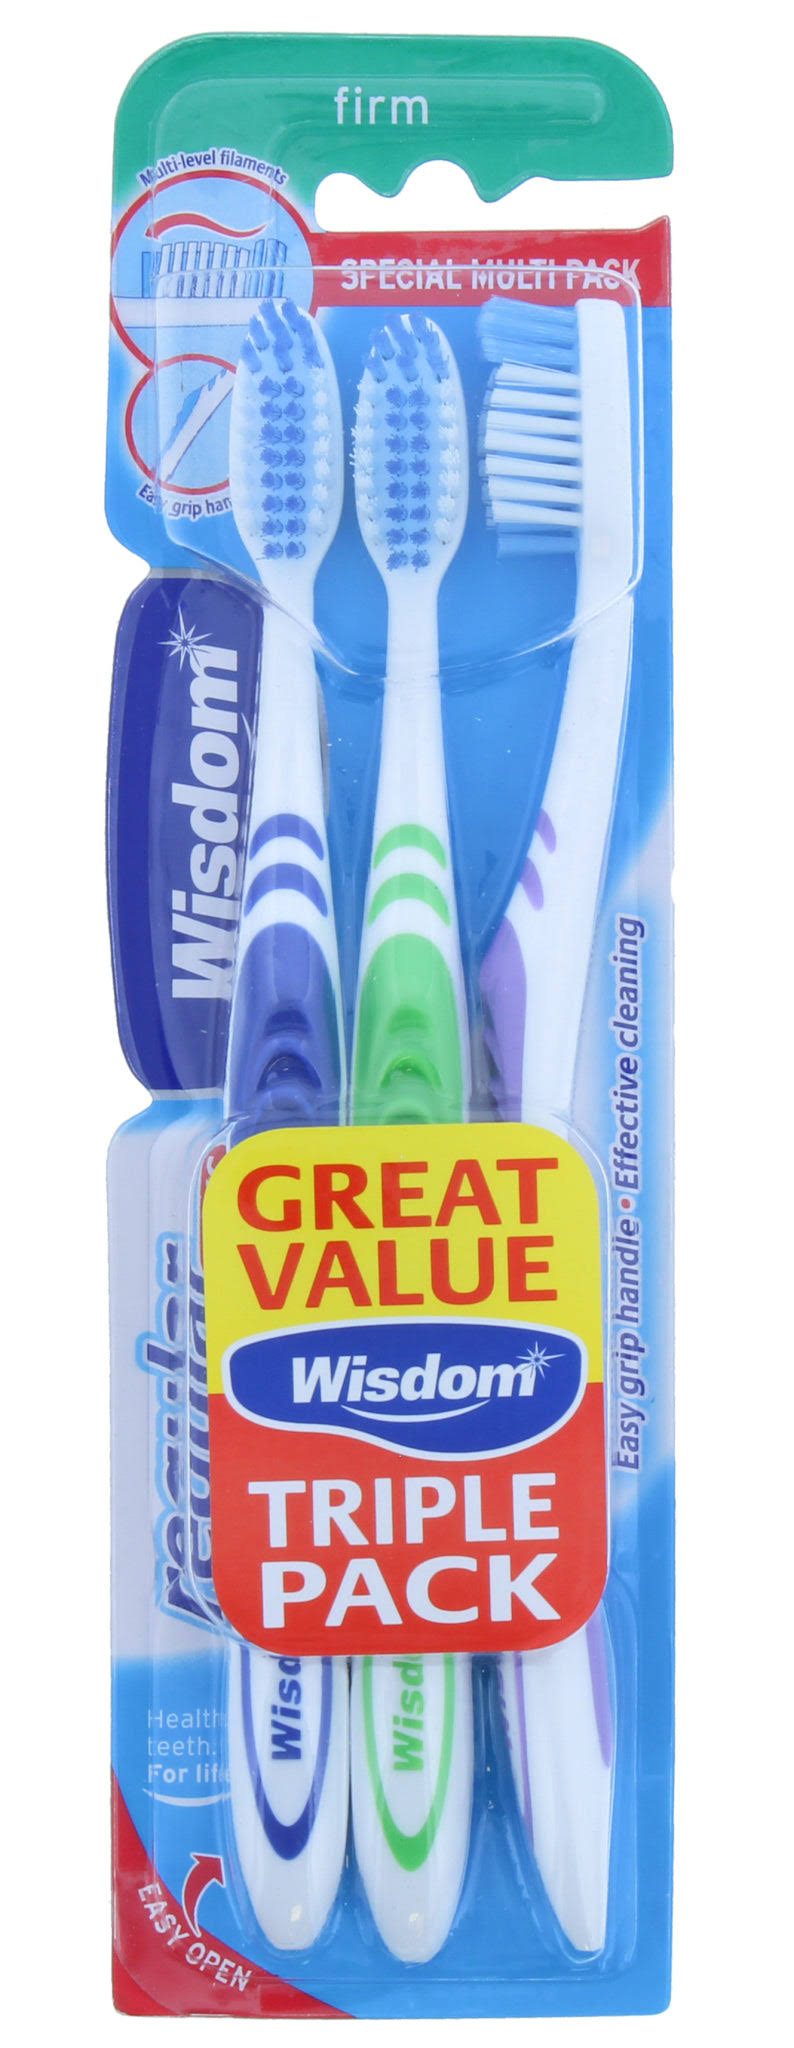 Wisdom Regular Plus Firm Toothbrush - 3pk